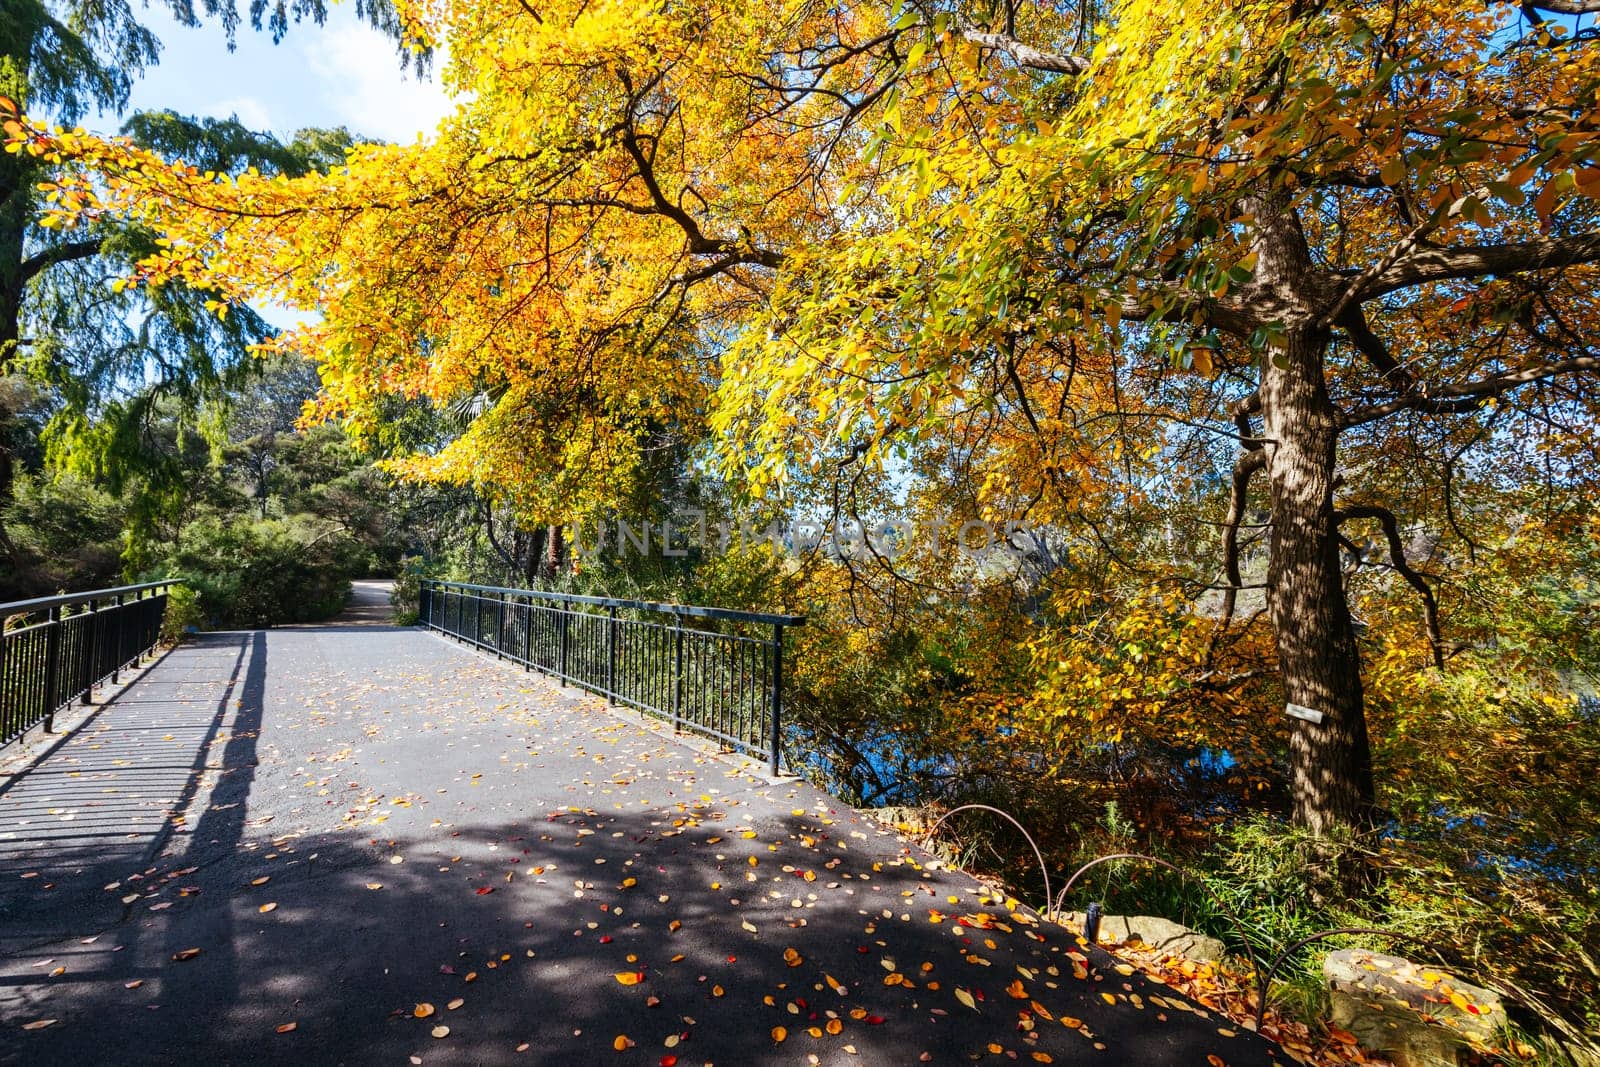 Royal Botanic Gardens in Melbourne Australia by FiledIMAGE